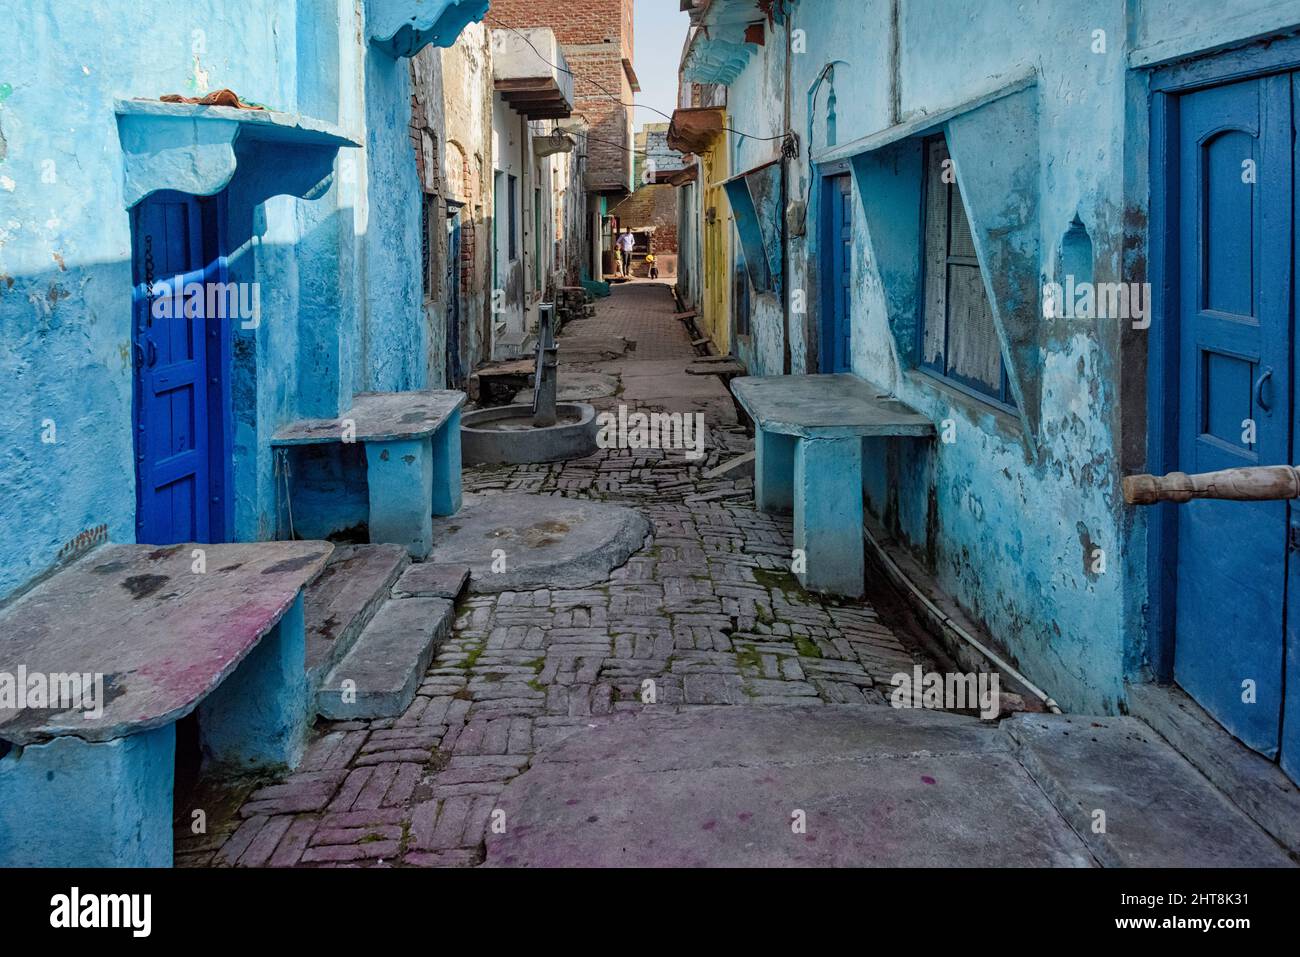 Blue houses, Baldeo, Mathura District, Uttar Pradesh, India Stock Photo